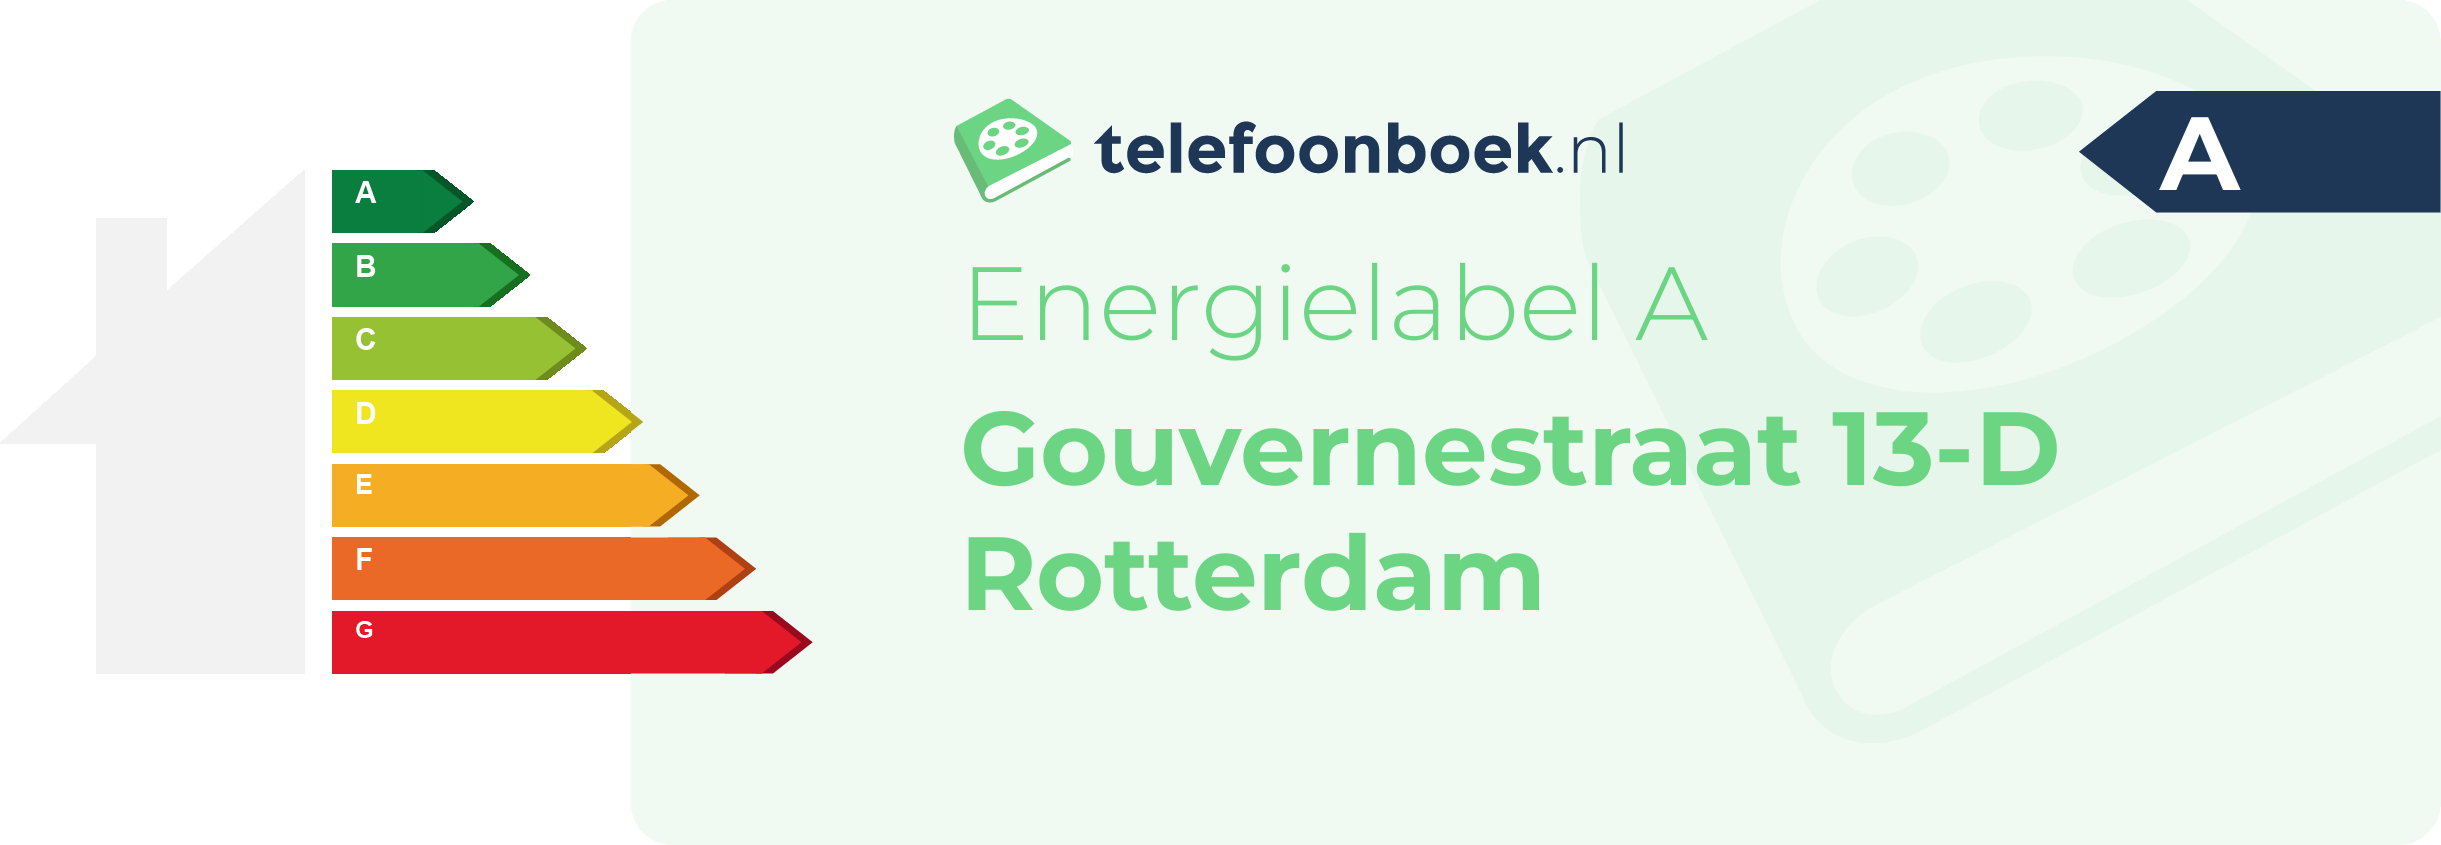 Energielabel Gouvernestraat 13-D Rotterdam